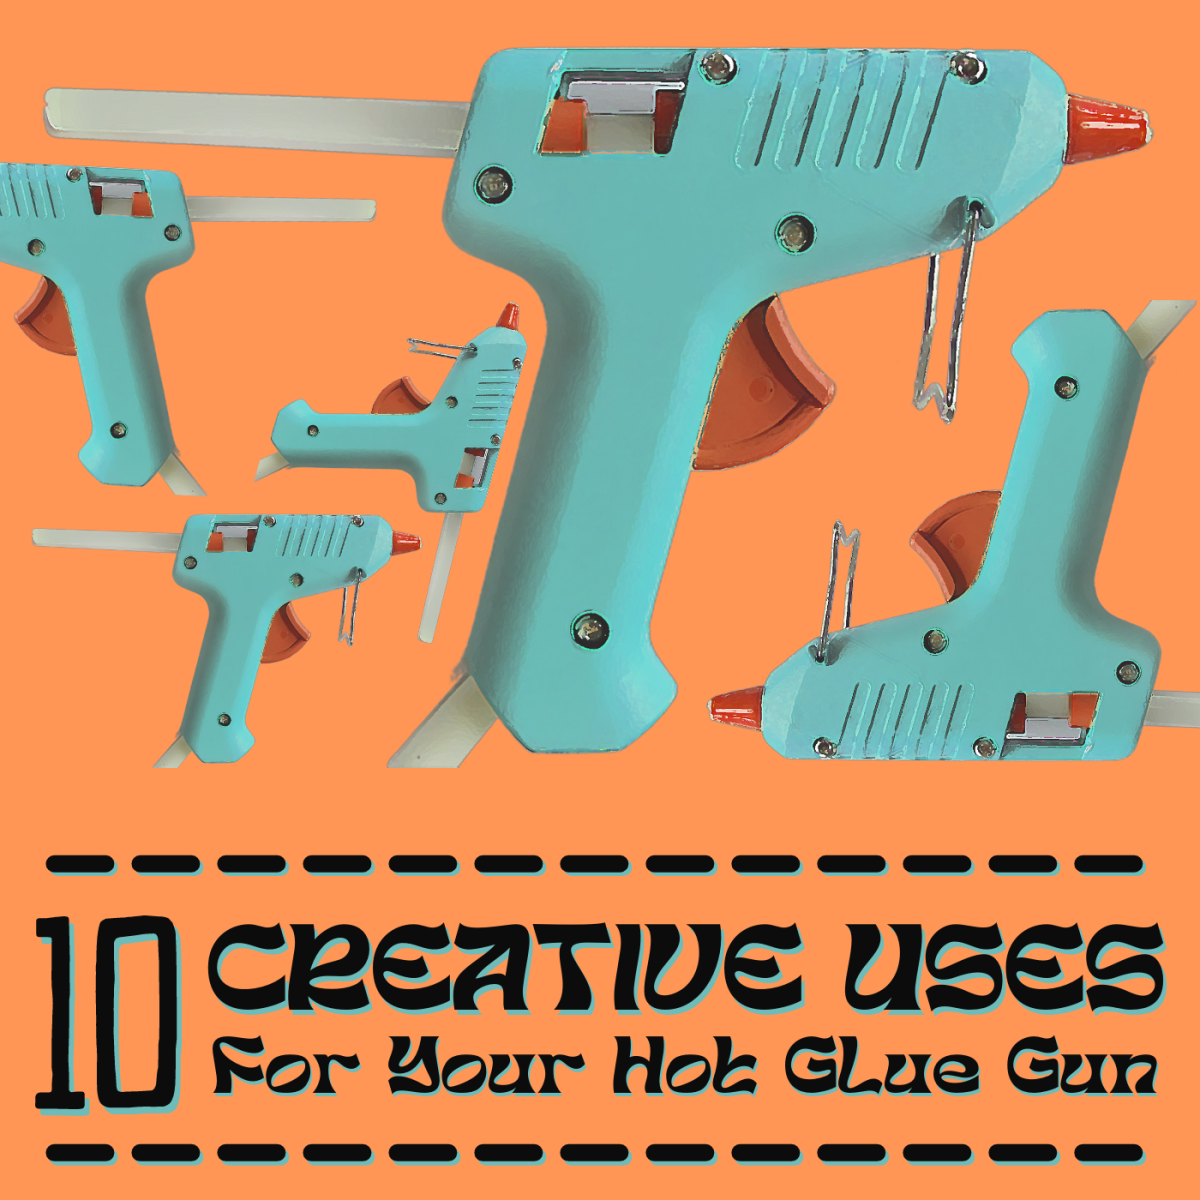 10 Genius Ways to Use Your Hot Glue Gun - FeltMagnet